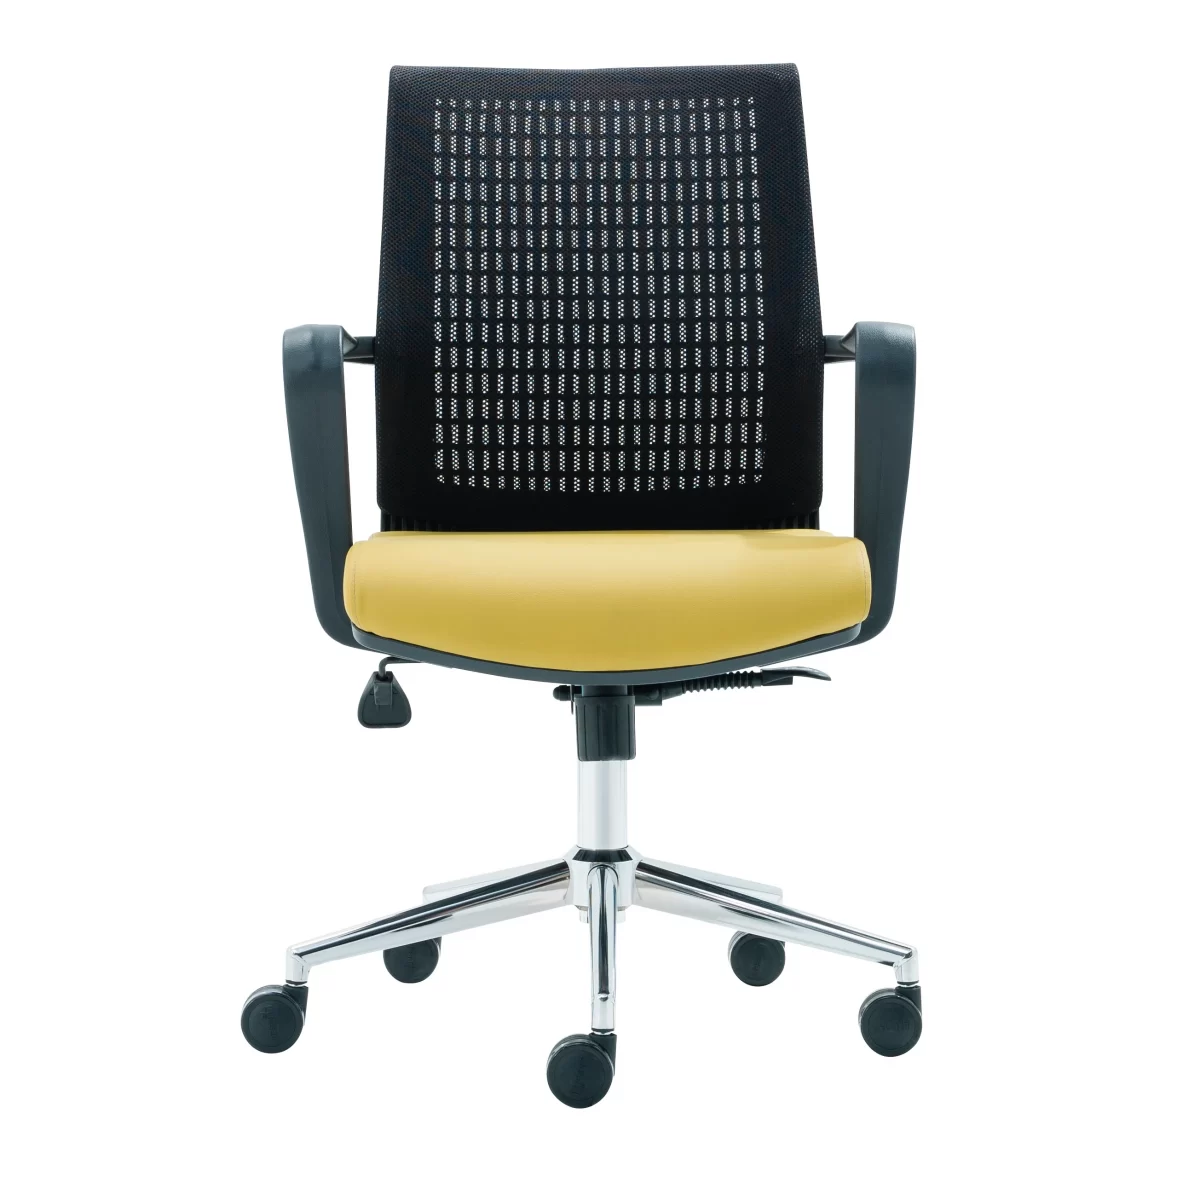 Visha Ch Manager Office Chair Chrome Legs scaled